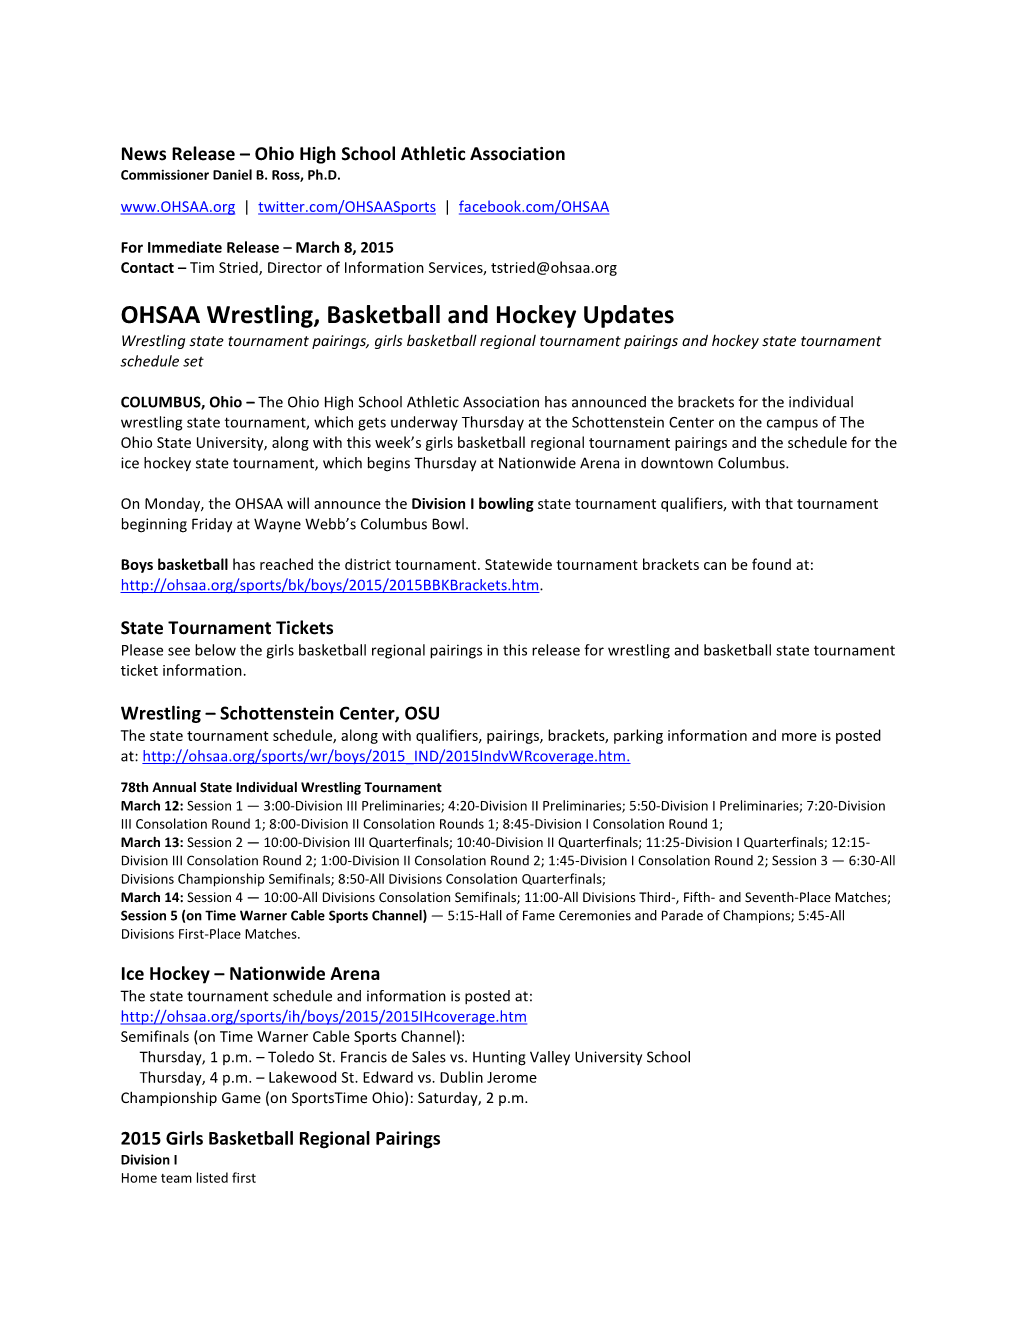 OHSAA Wrestling, Basketball and Hockey Updates